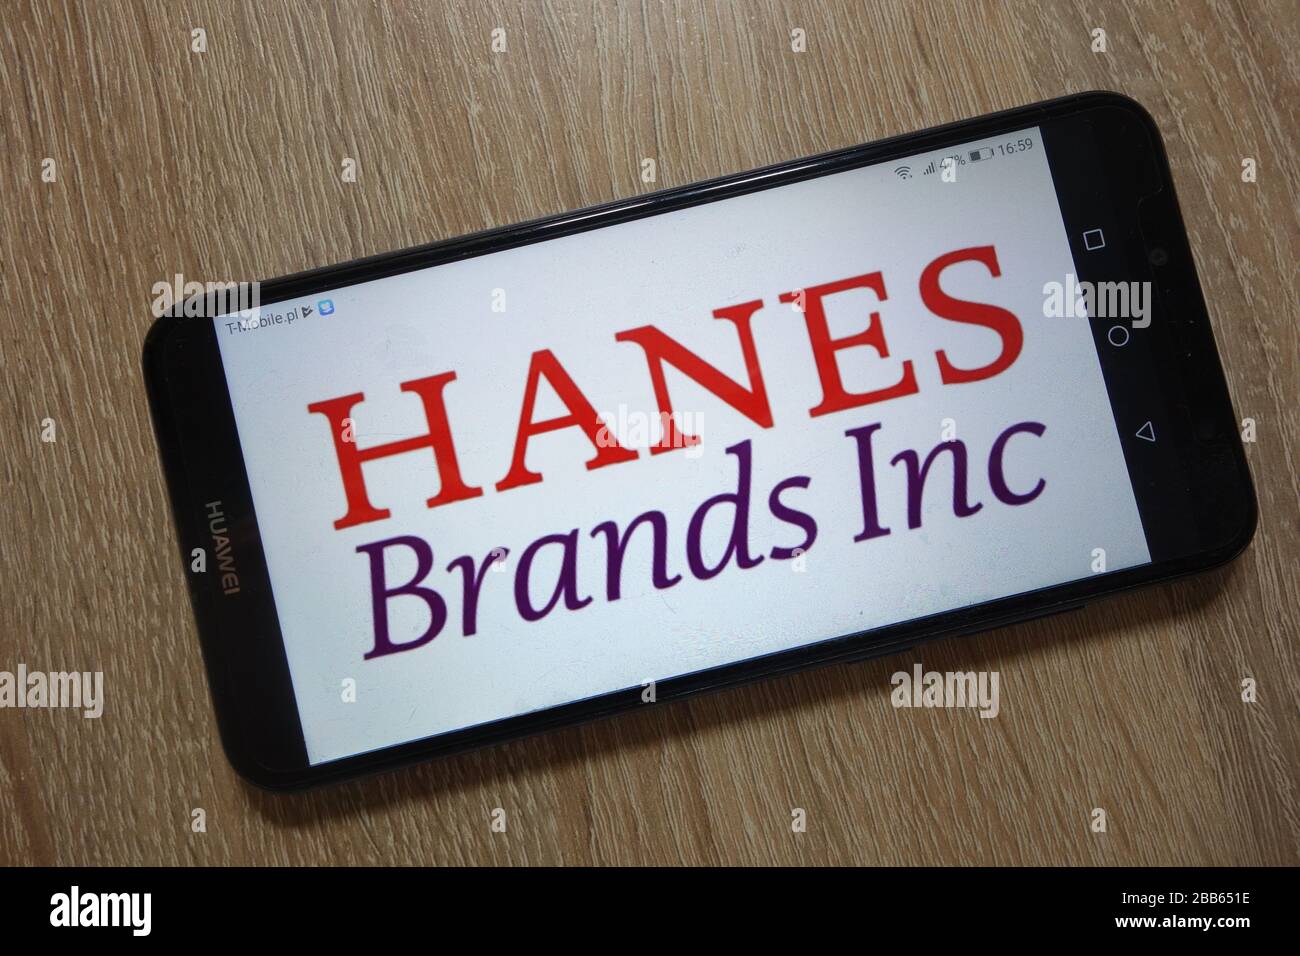 Hanesbrands, Inc. logo displayed on smartphone Stock Photo